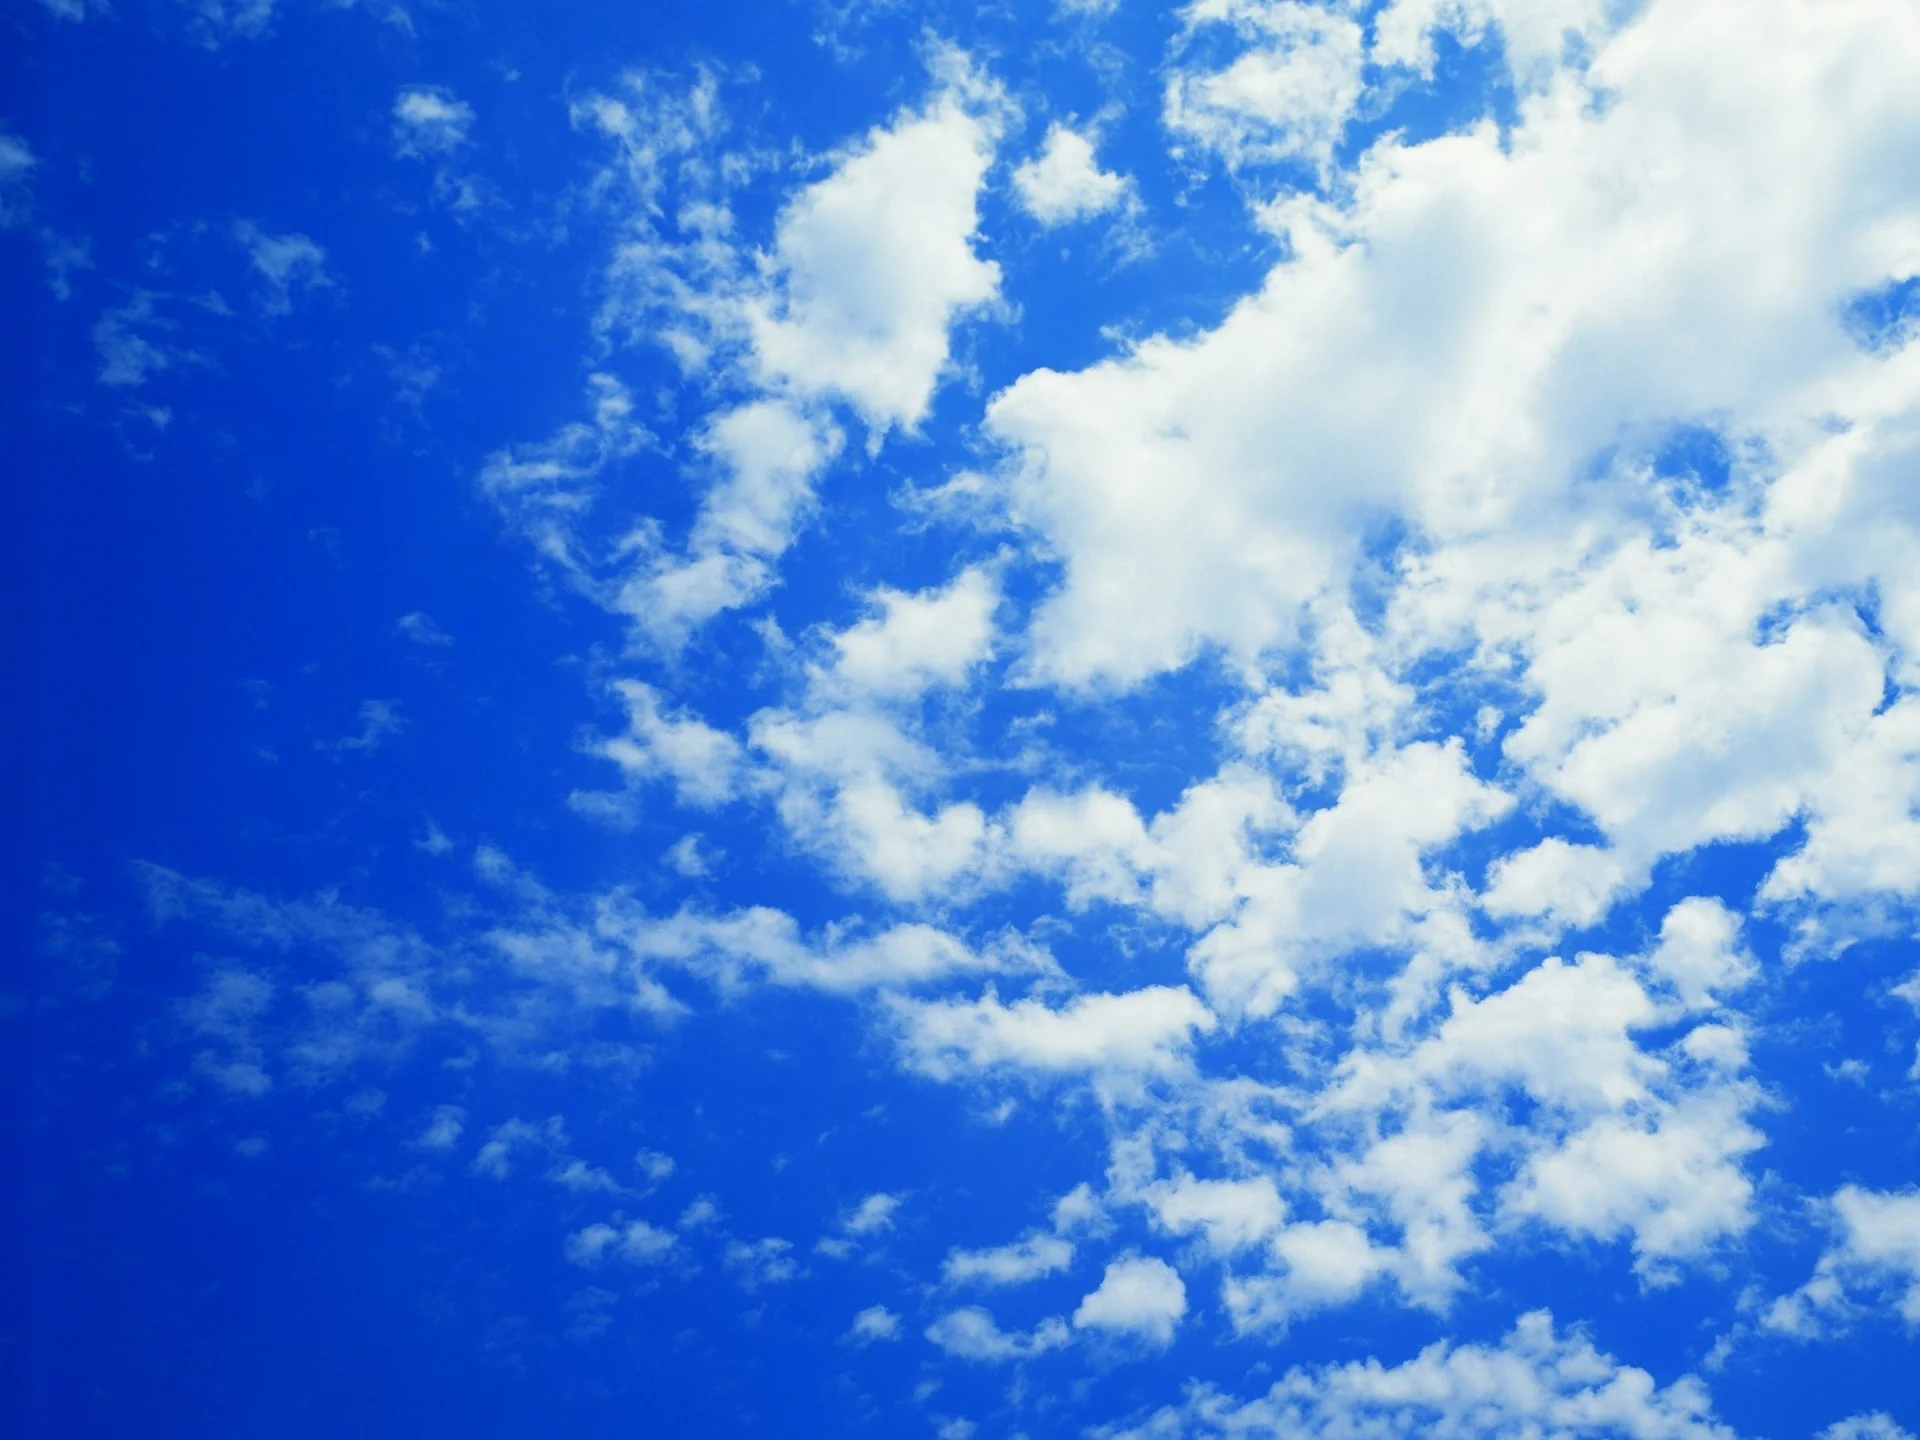 Blue Sky Clouds Wallpaper images